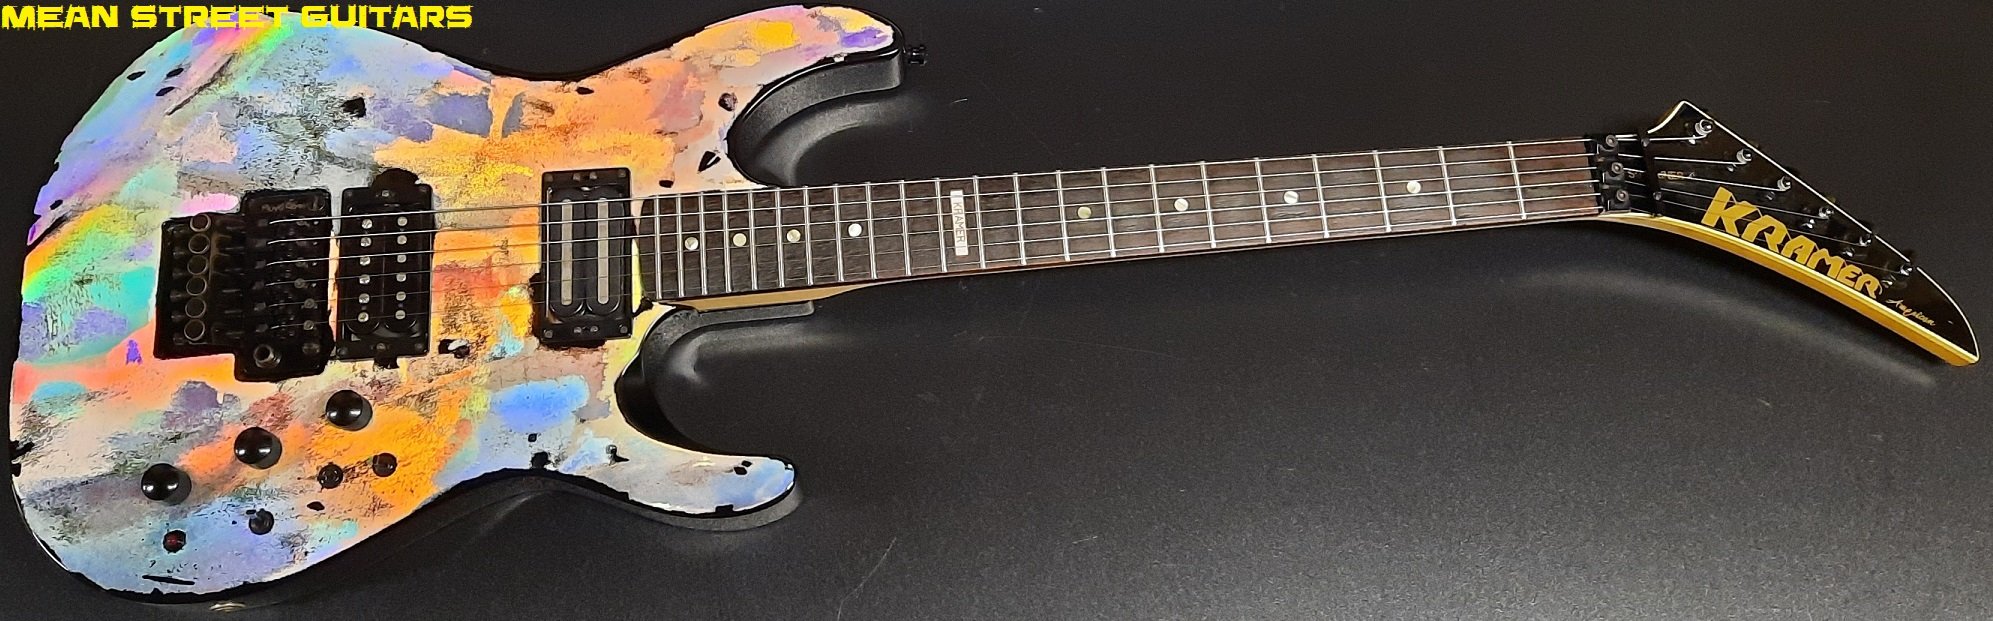 Mean Street Guitars Holoflash AT Kramer Cliff H pic 2.jpg